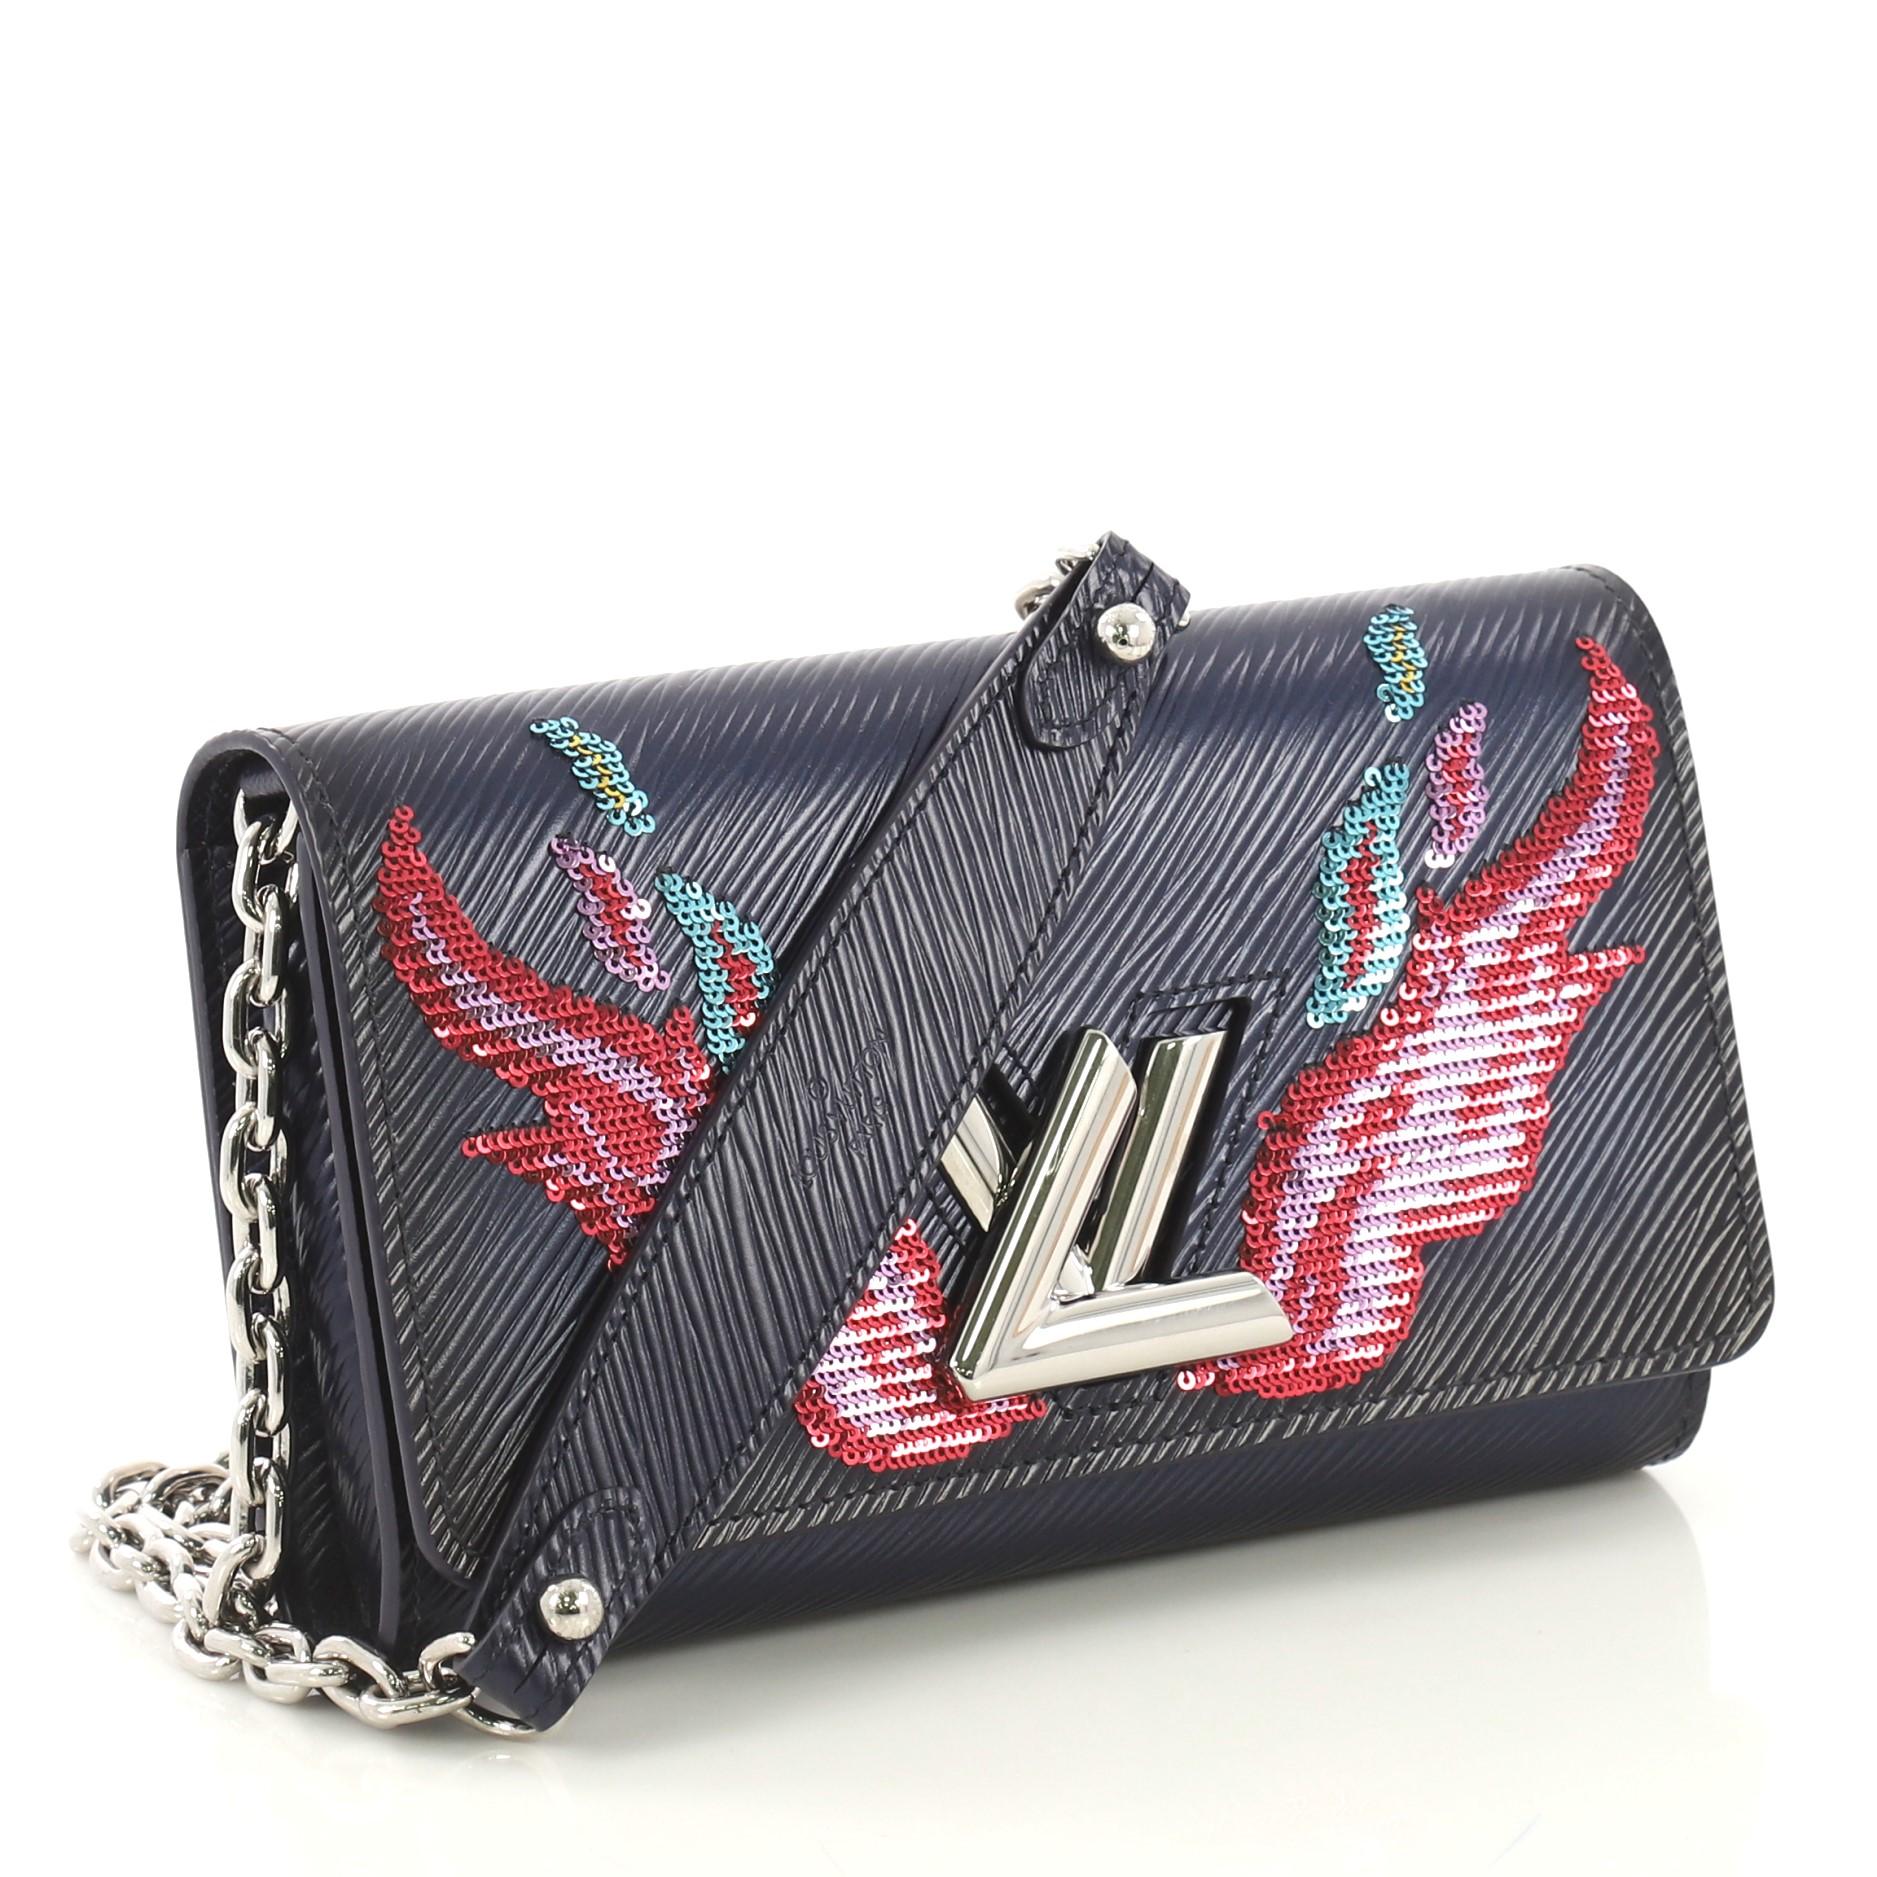 Black Louis Vuitton Twist Chain Wallet Epi Leather with Sequins